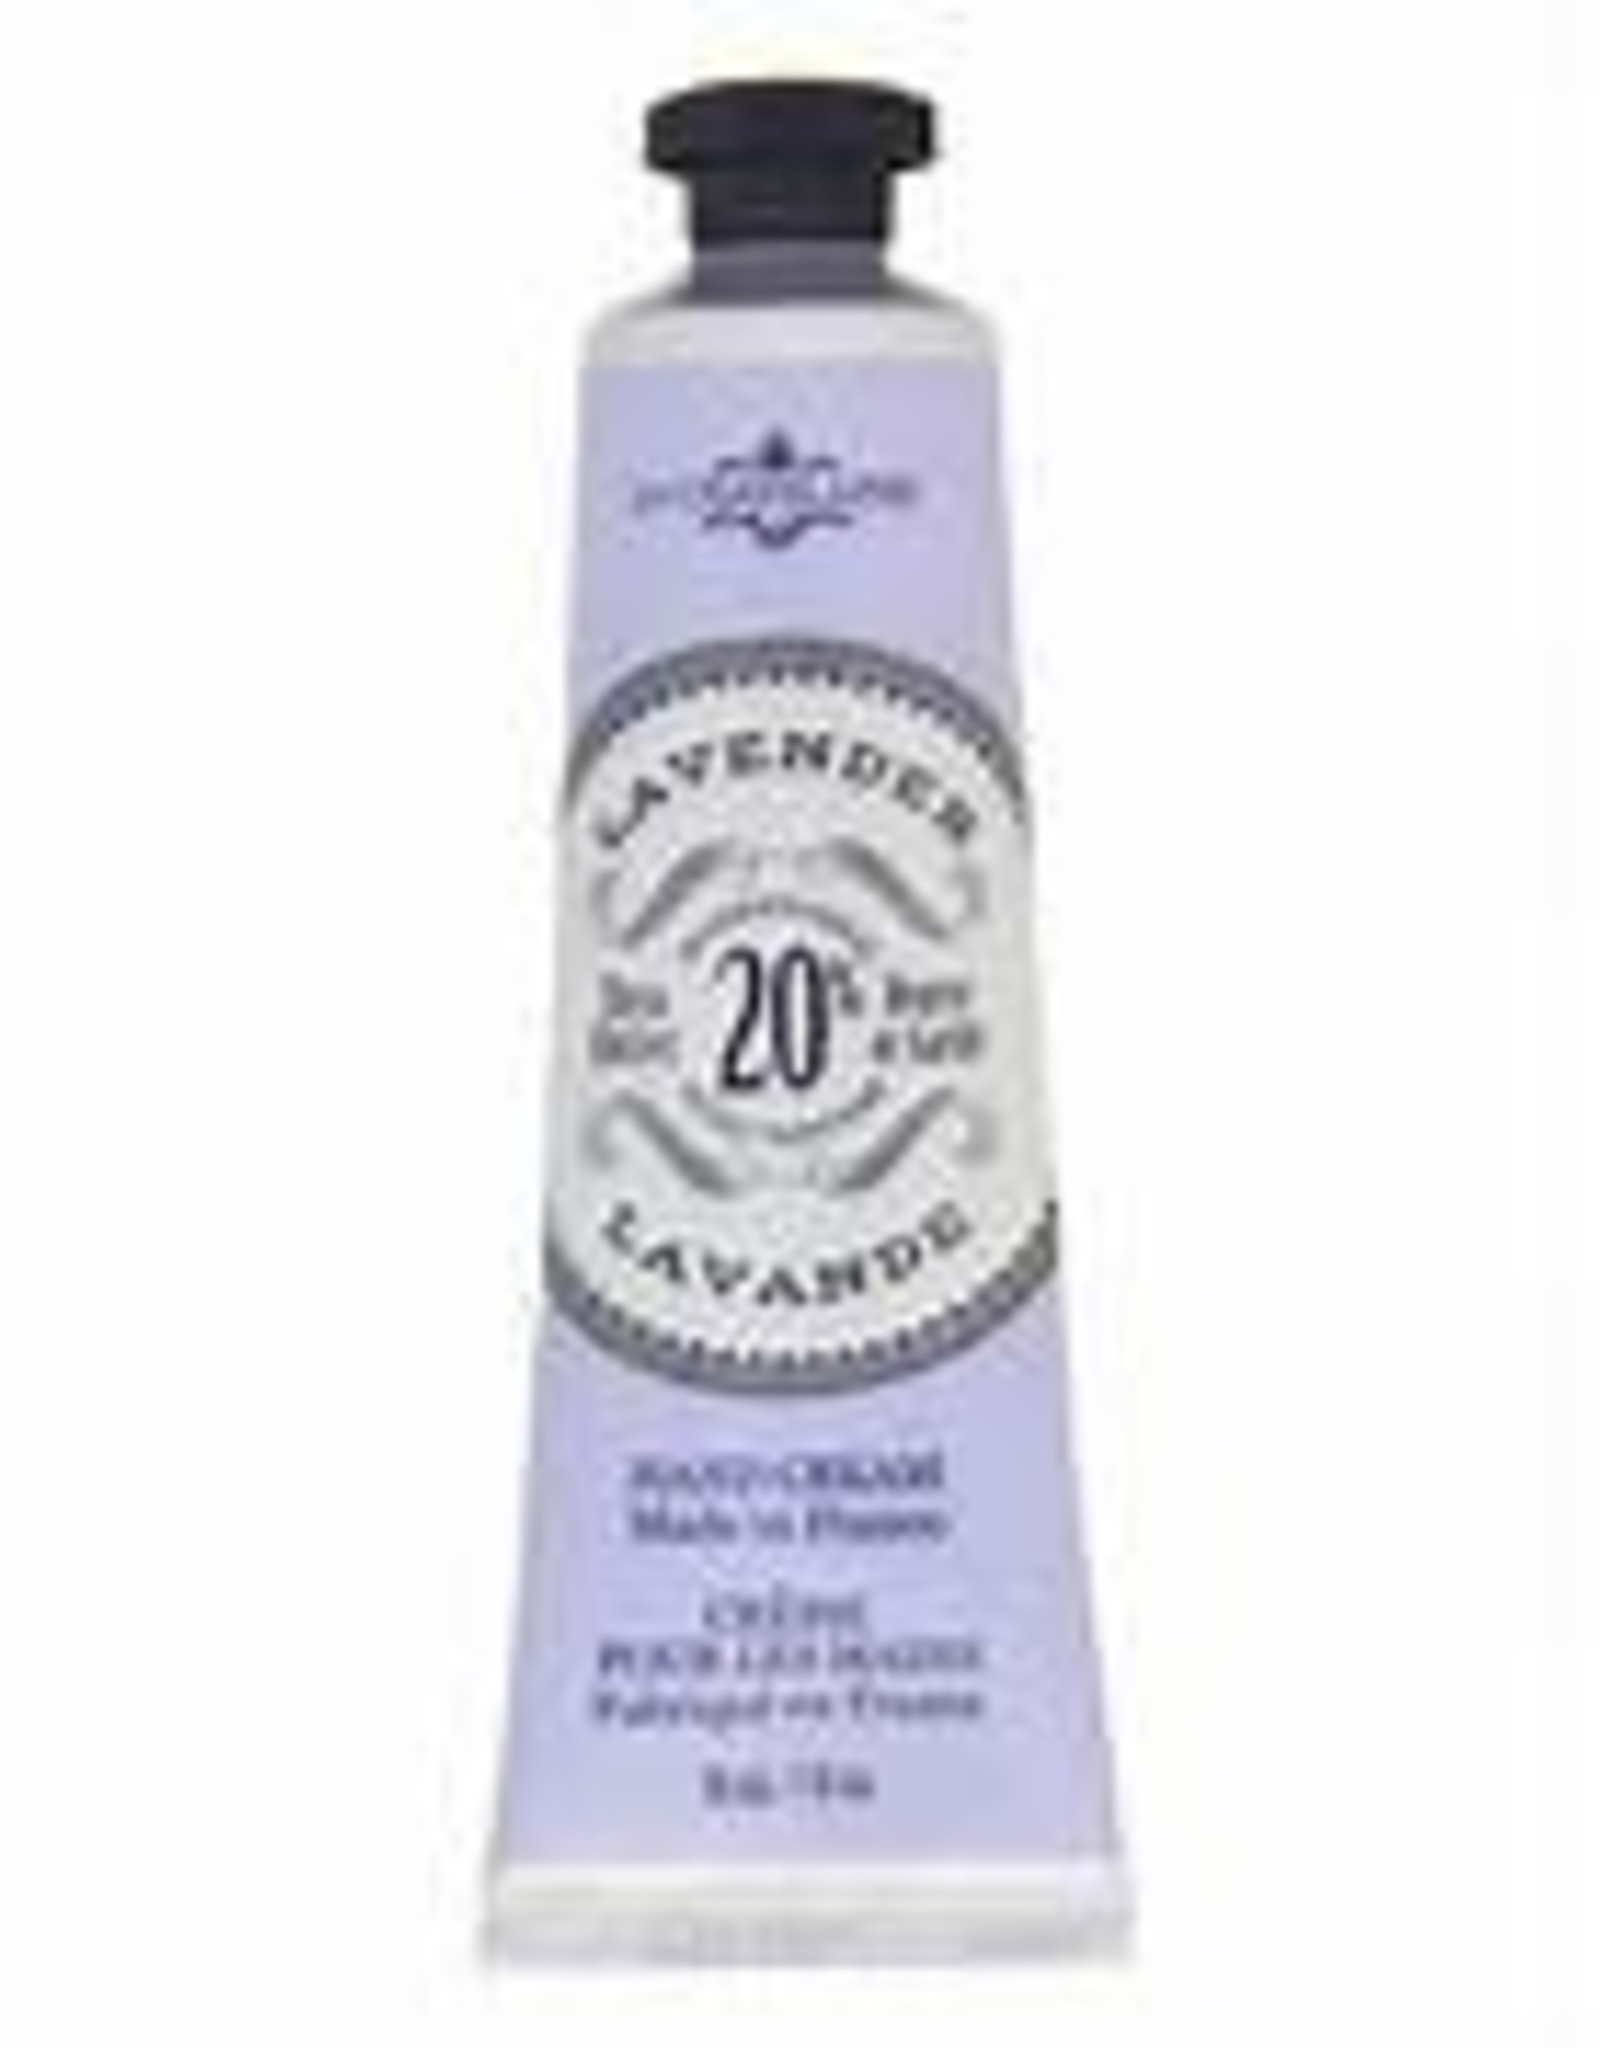 Le Chatalaine Travel Hand Cream 10 oz